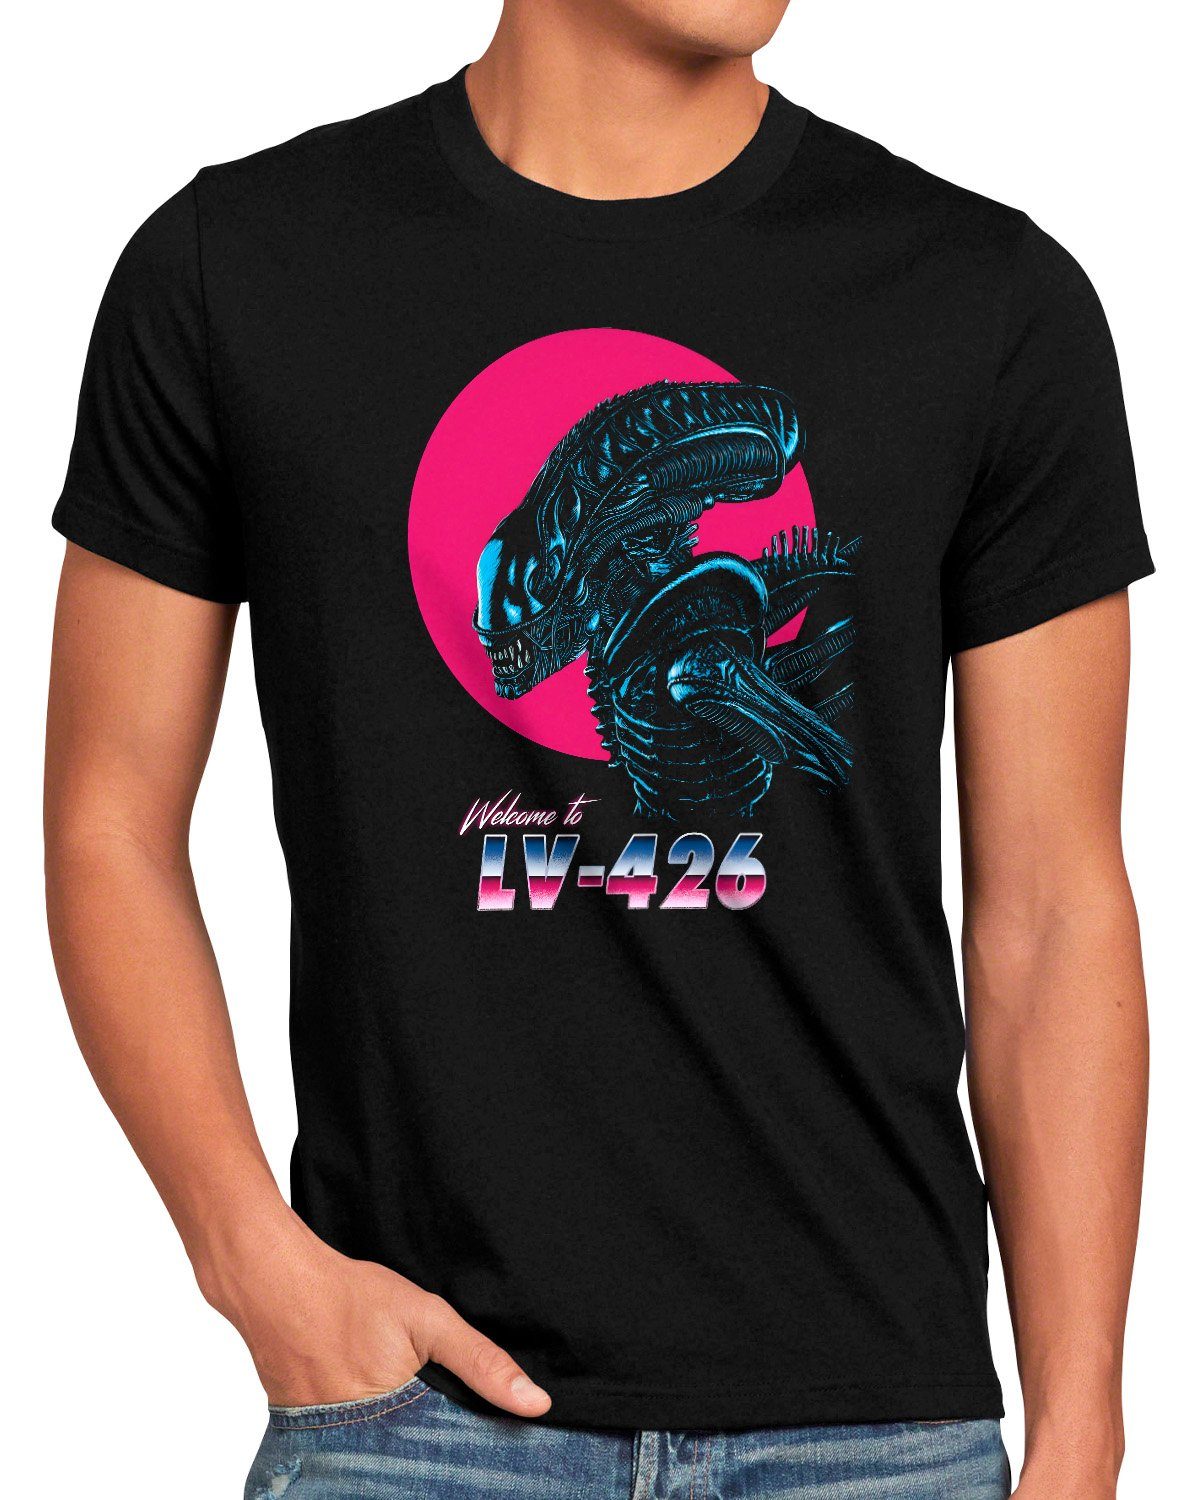 T-Shirt predator xenomorph Come to Print-Shirt style3 LV-426 ridley scott alien Herren